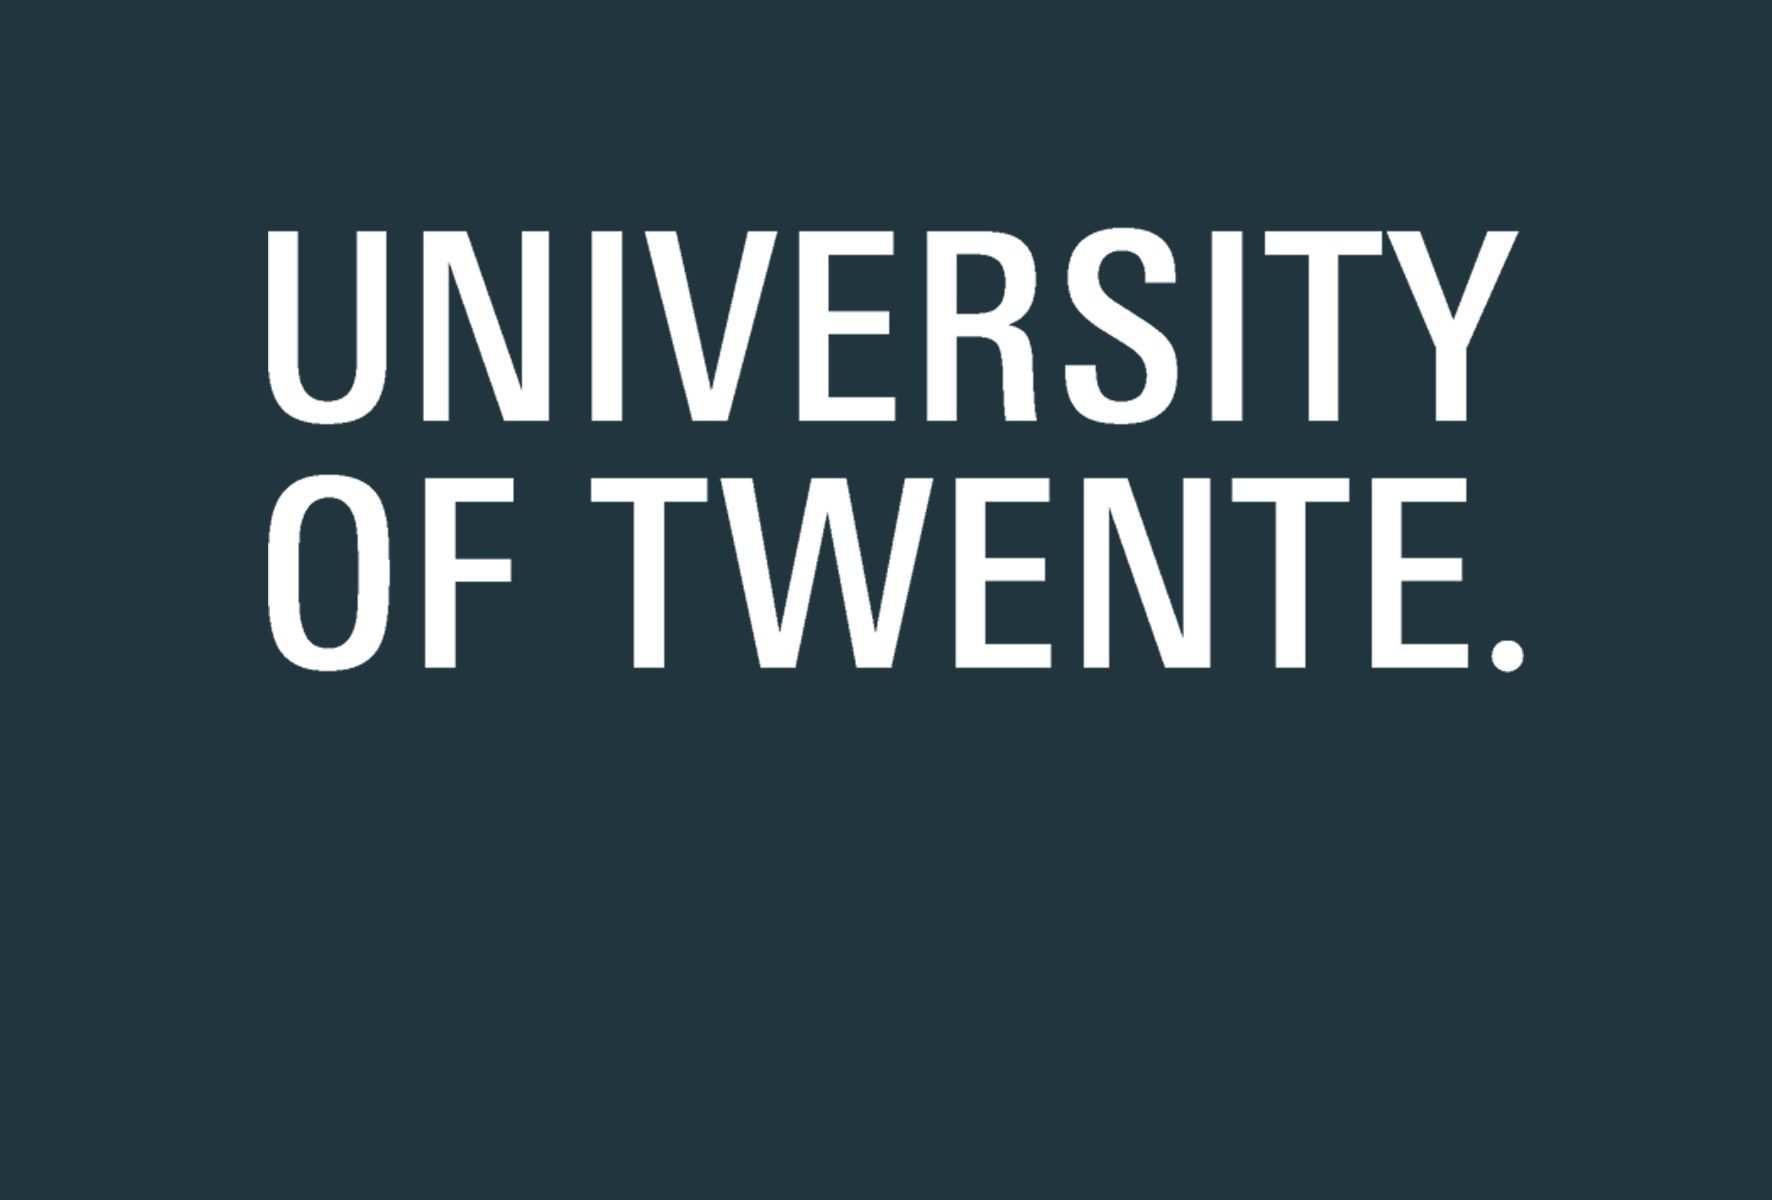 TRANSNATIONAL MEETING, University of TWENTE, Netherlands. November 10, 2020